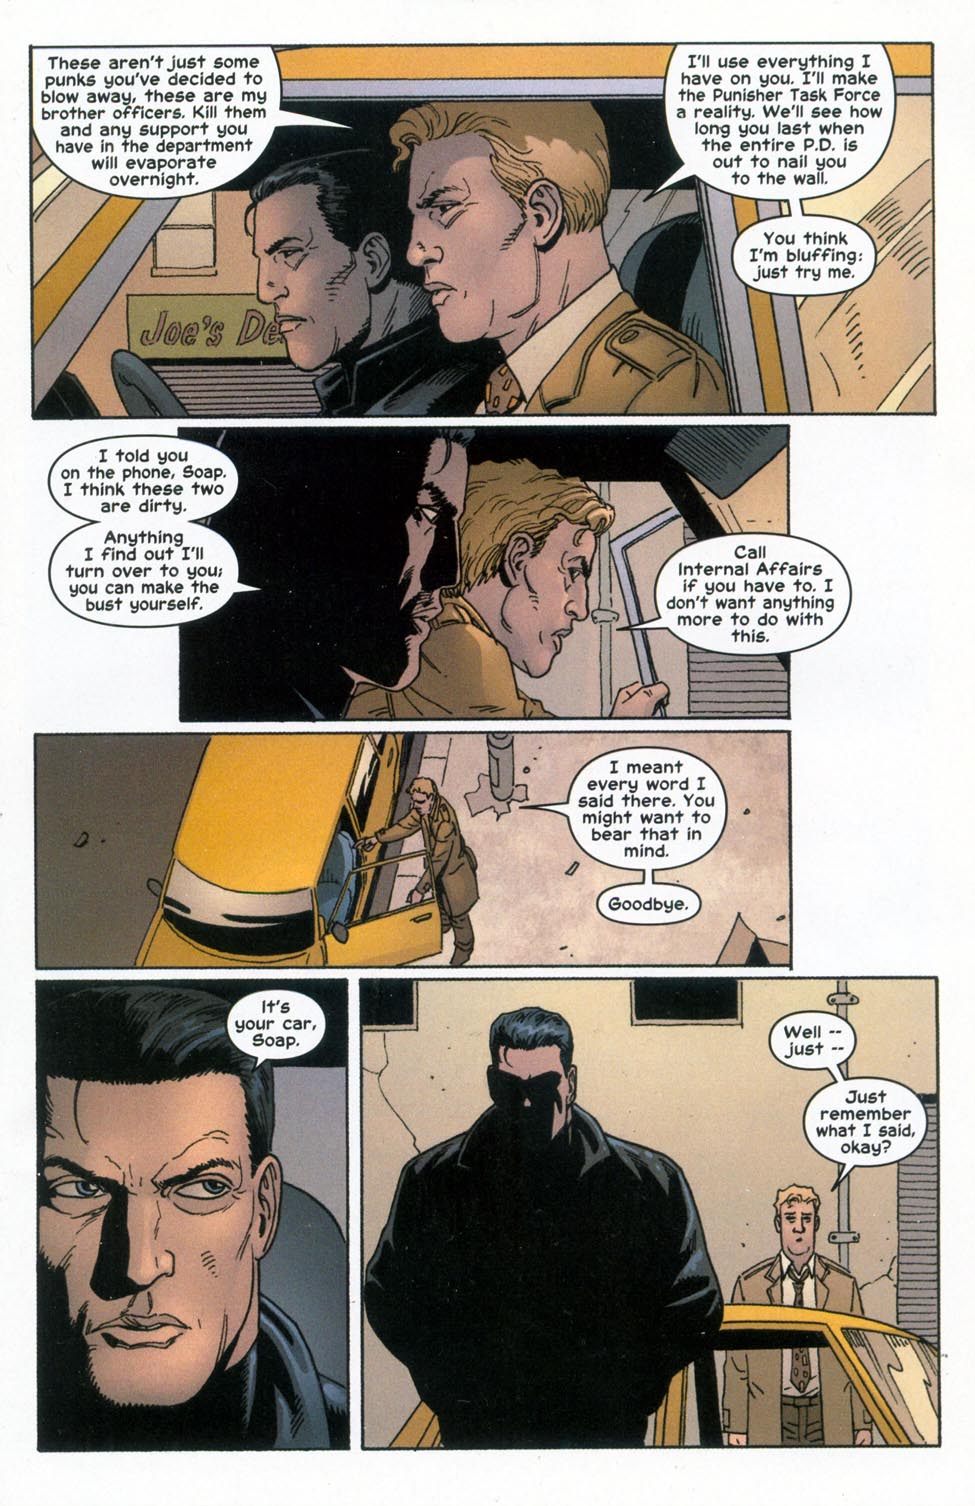 The Punisher (2001) Issue #20 - Brotherhood #01 #20 - English 9